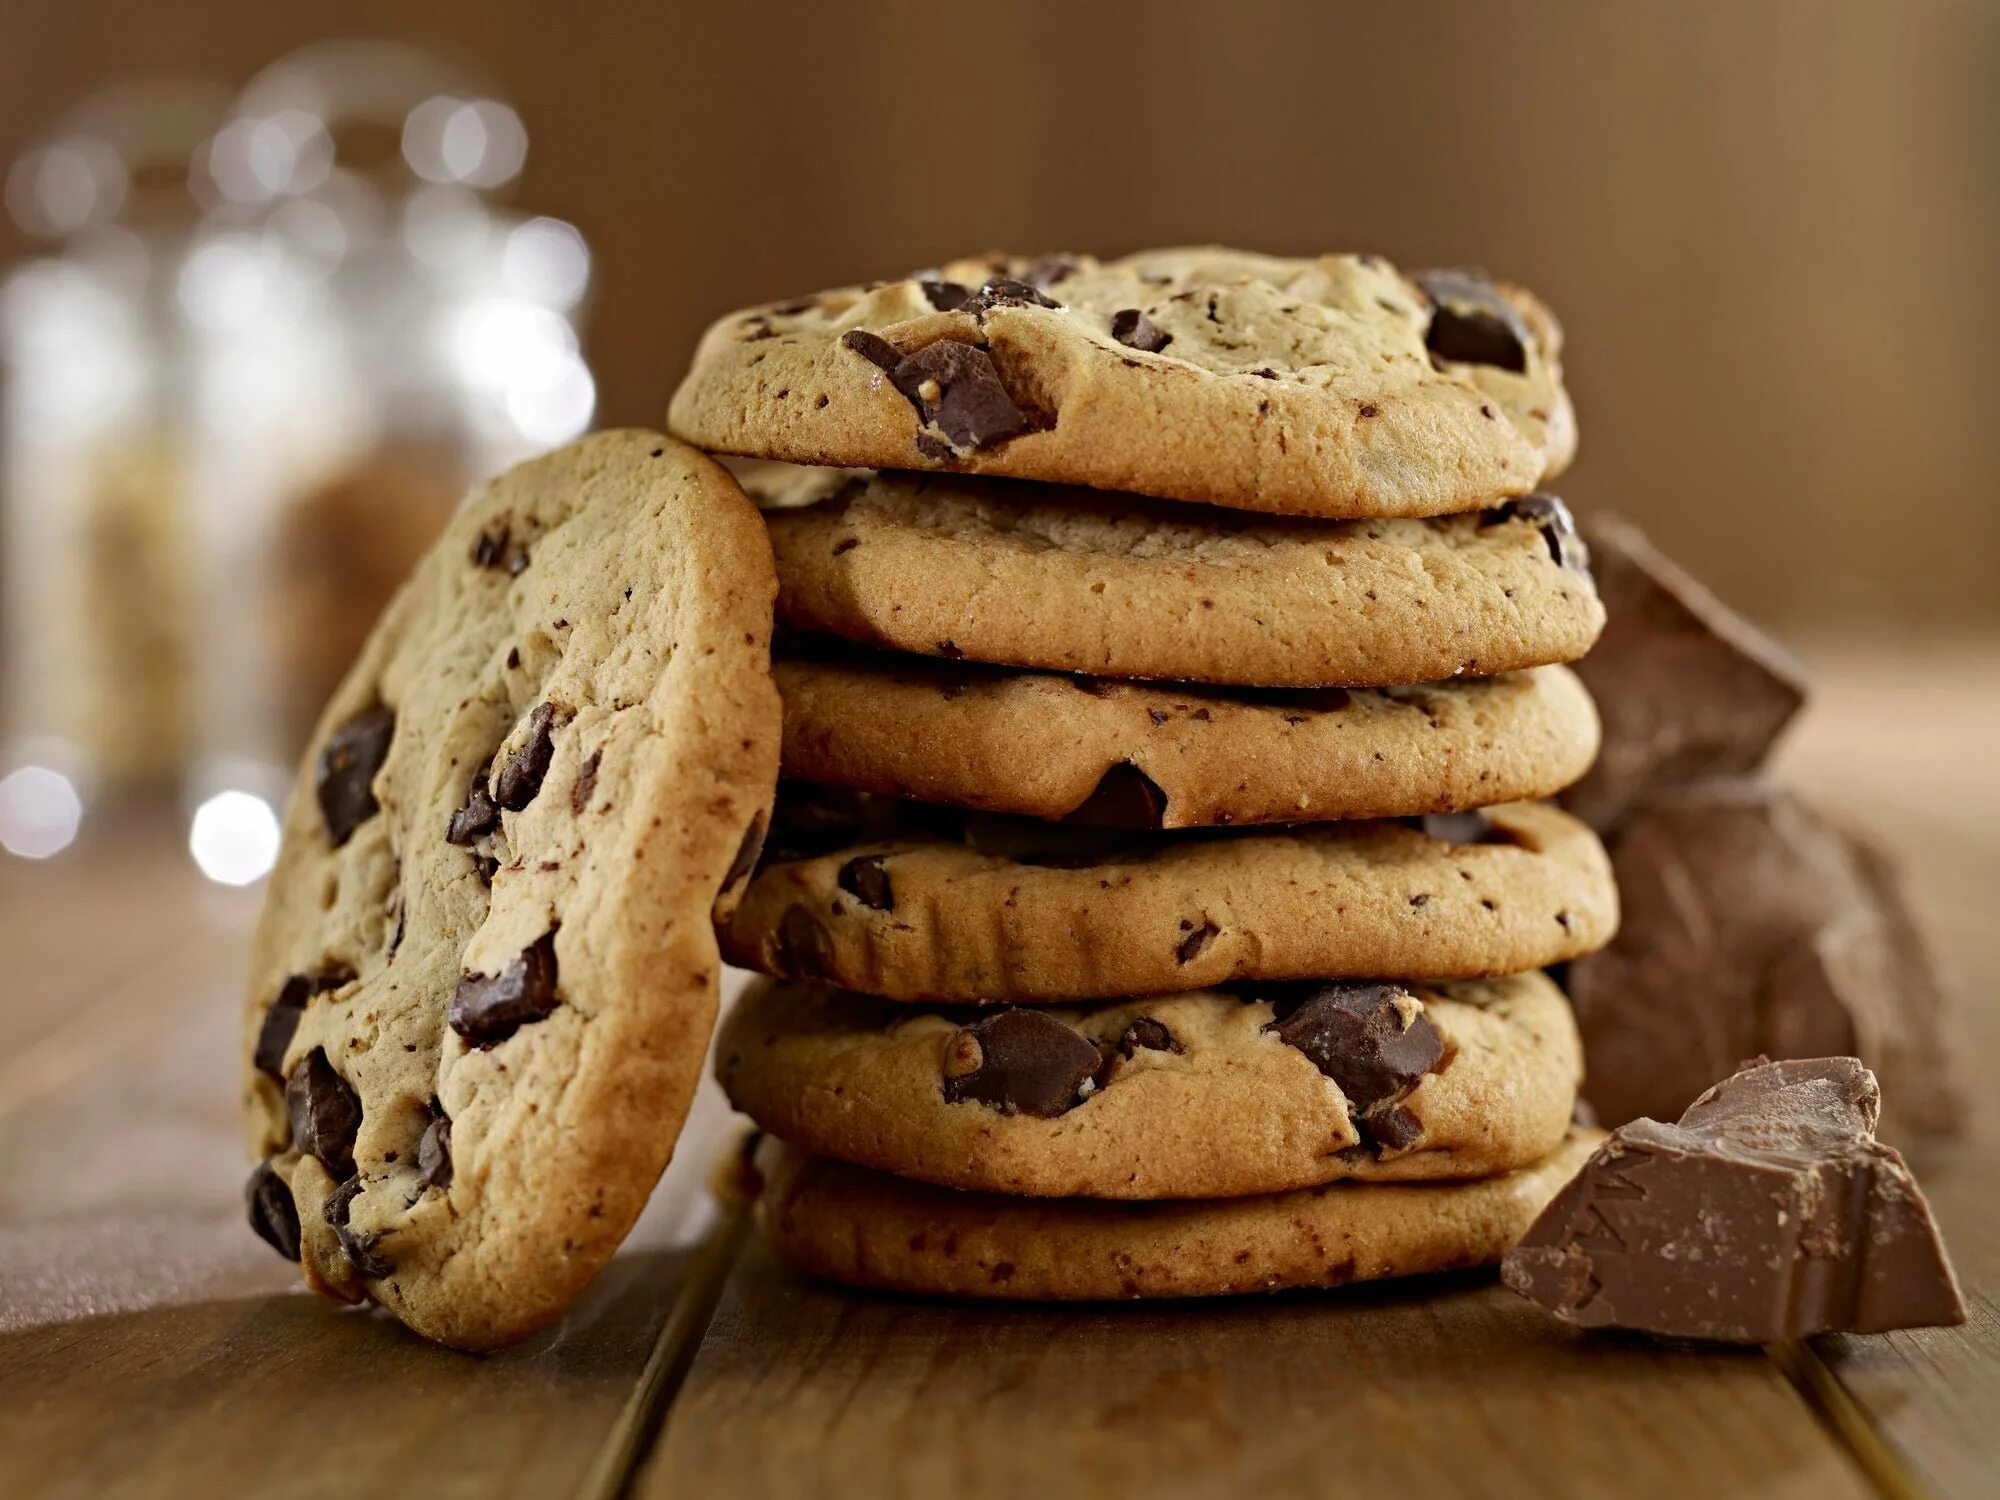 Content cookies. Американ кукис. Кукис Шмукис. Печенье Chocolate Chip cookies. Печенье с шоколадной крошкой.